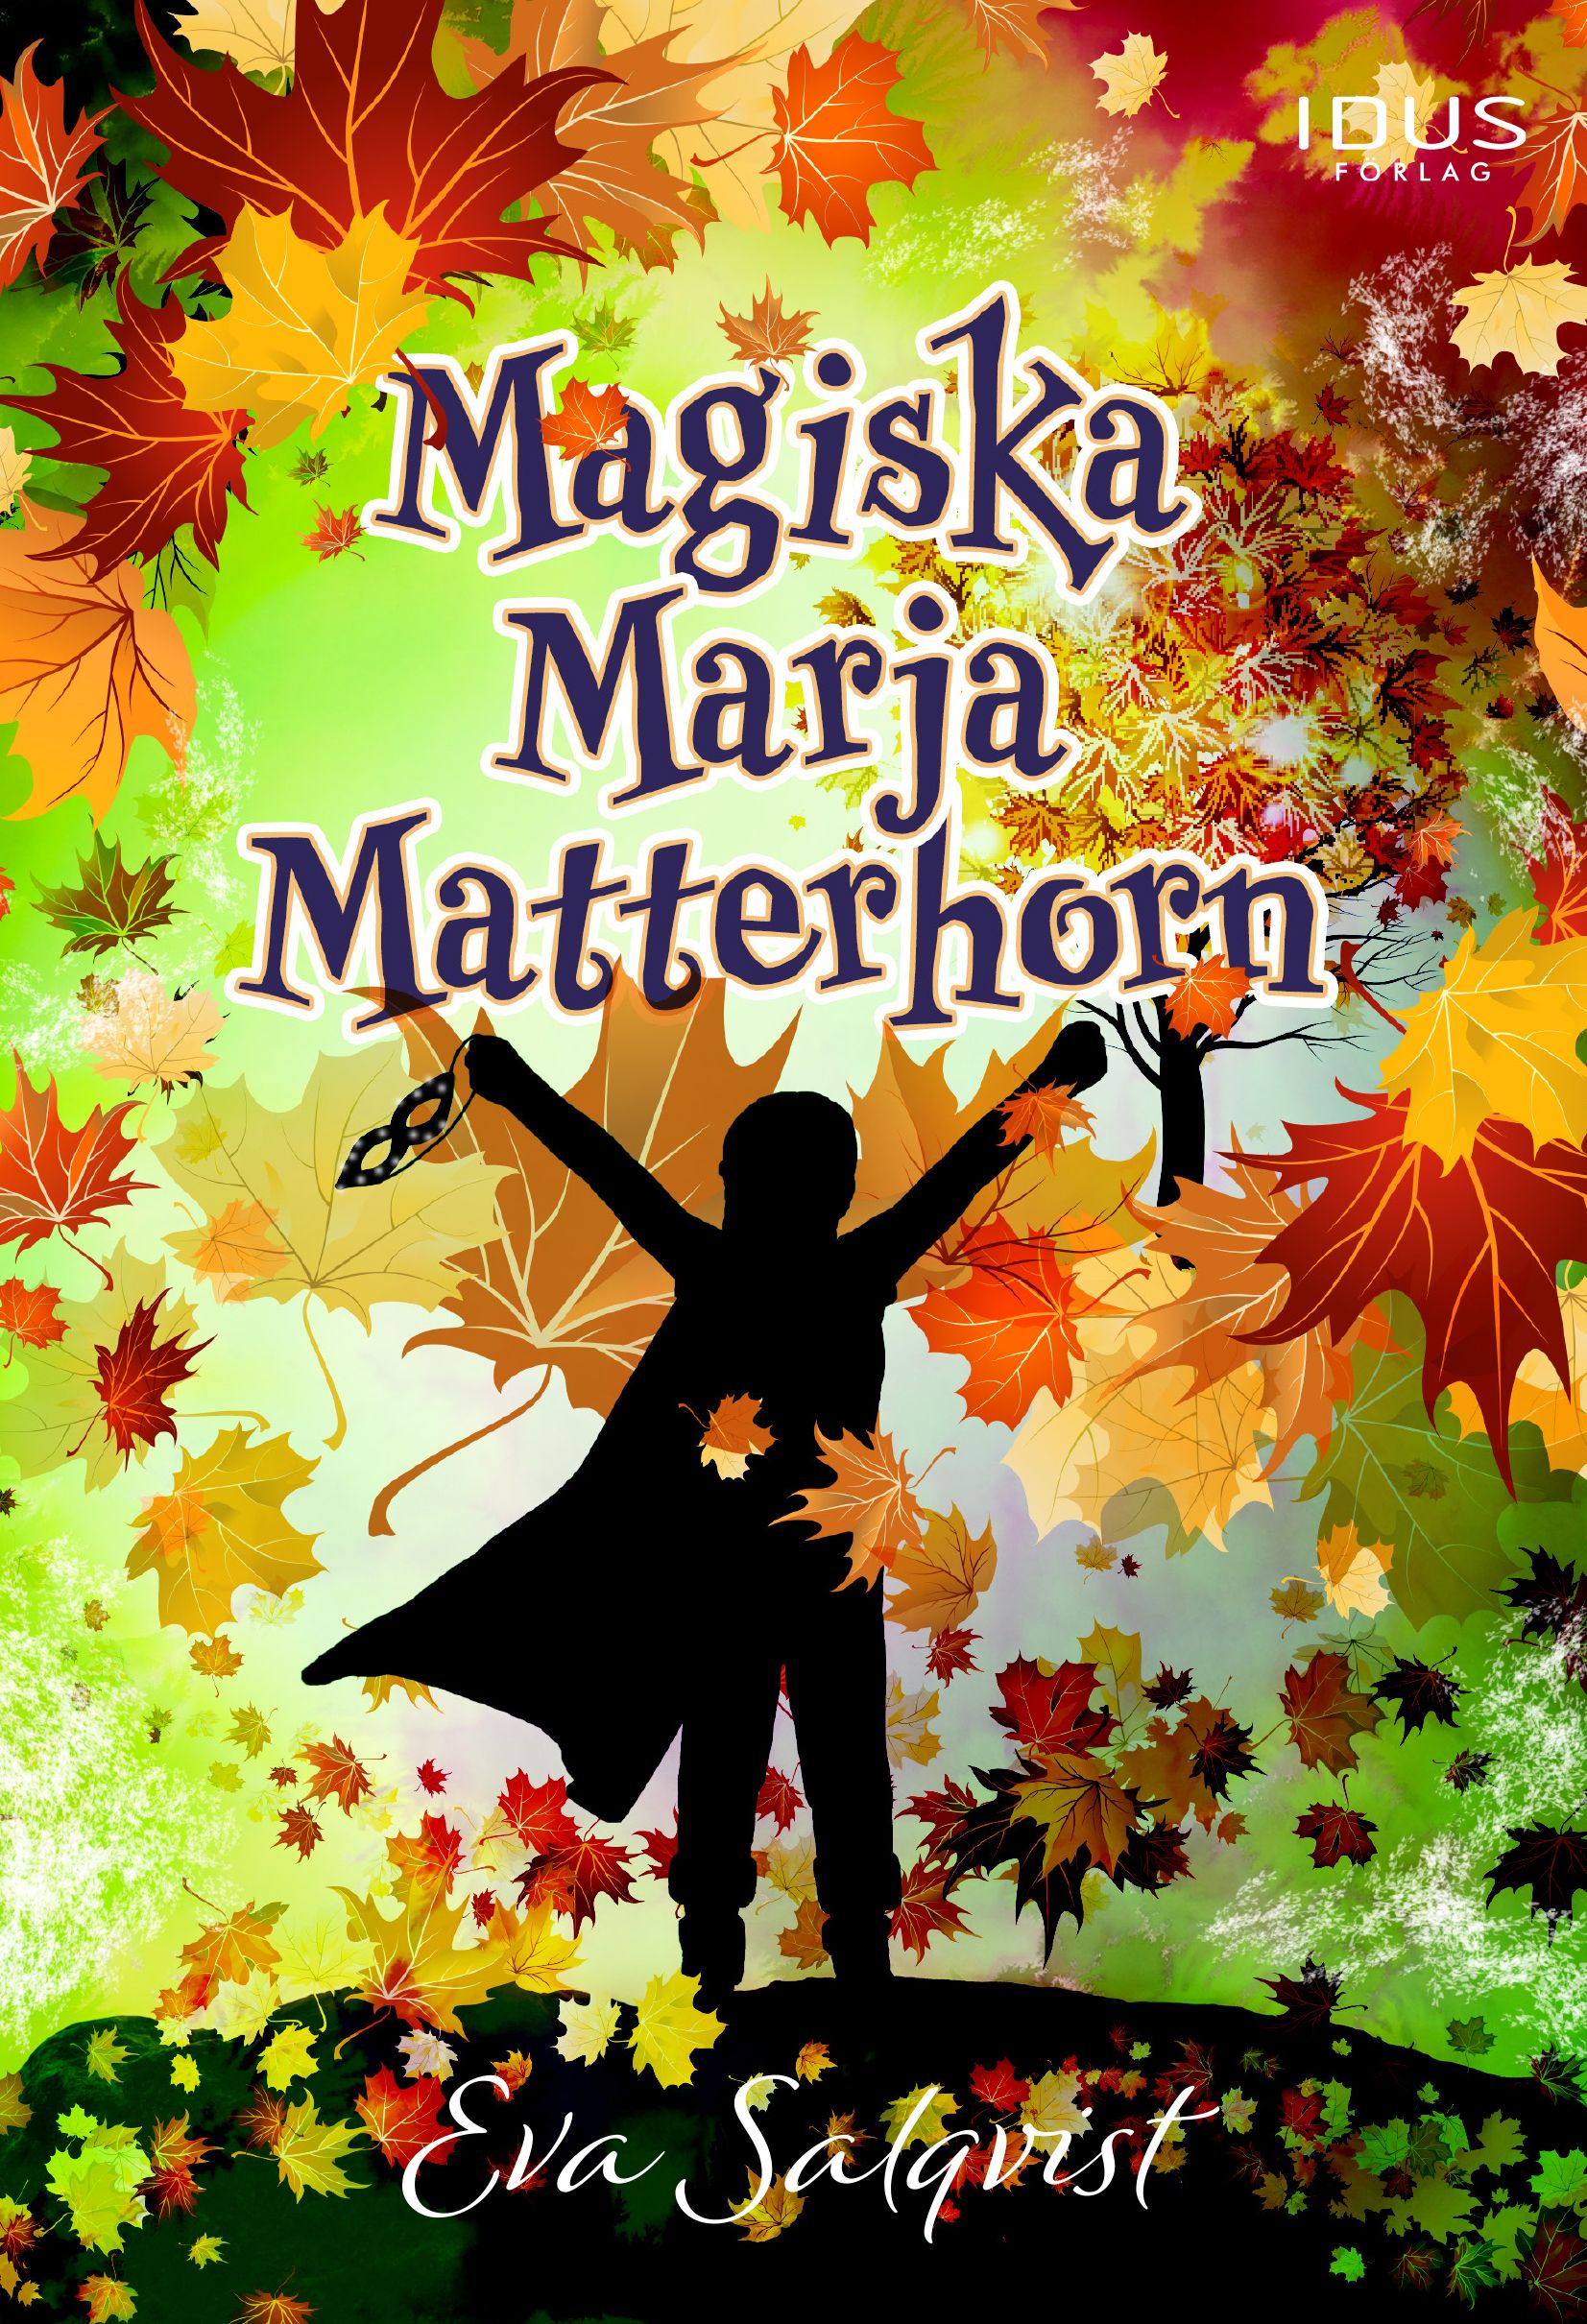 Magiska Marja Matterhorn, e-bog af Eva Salqvist